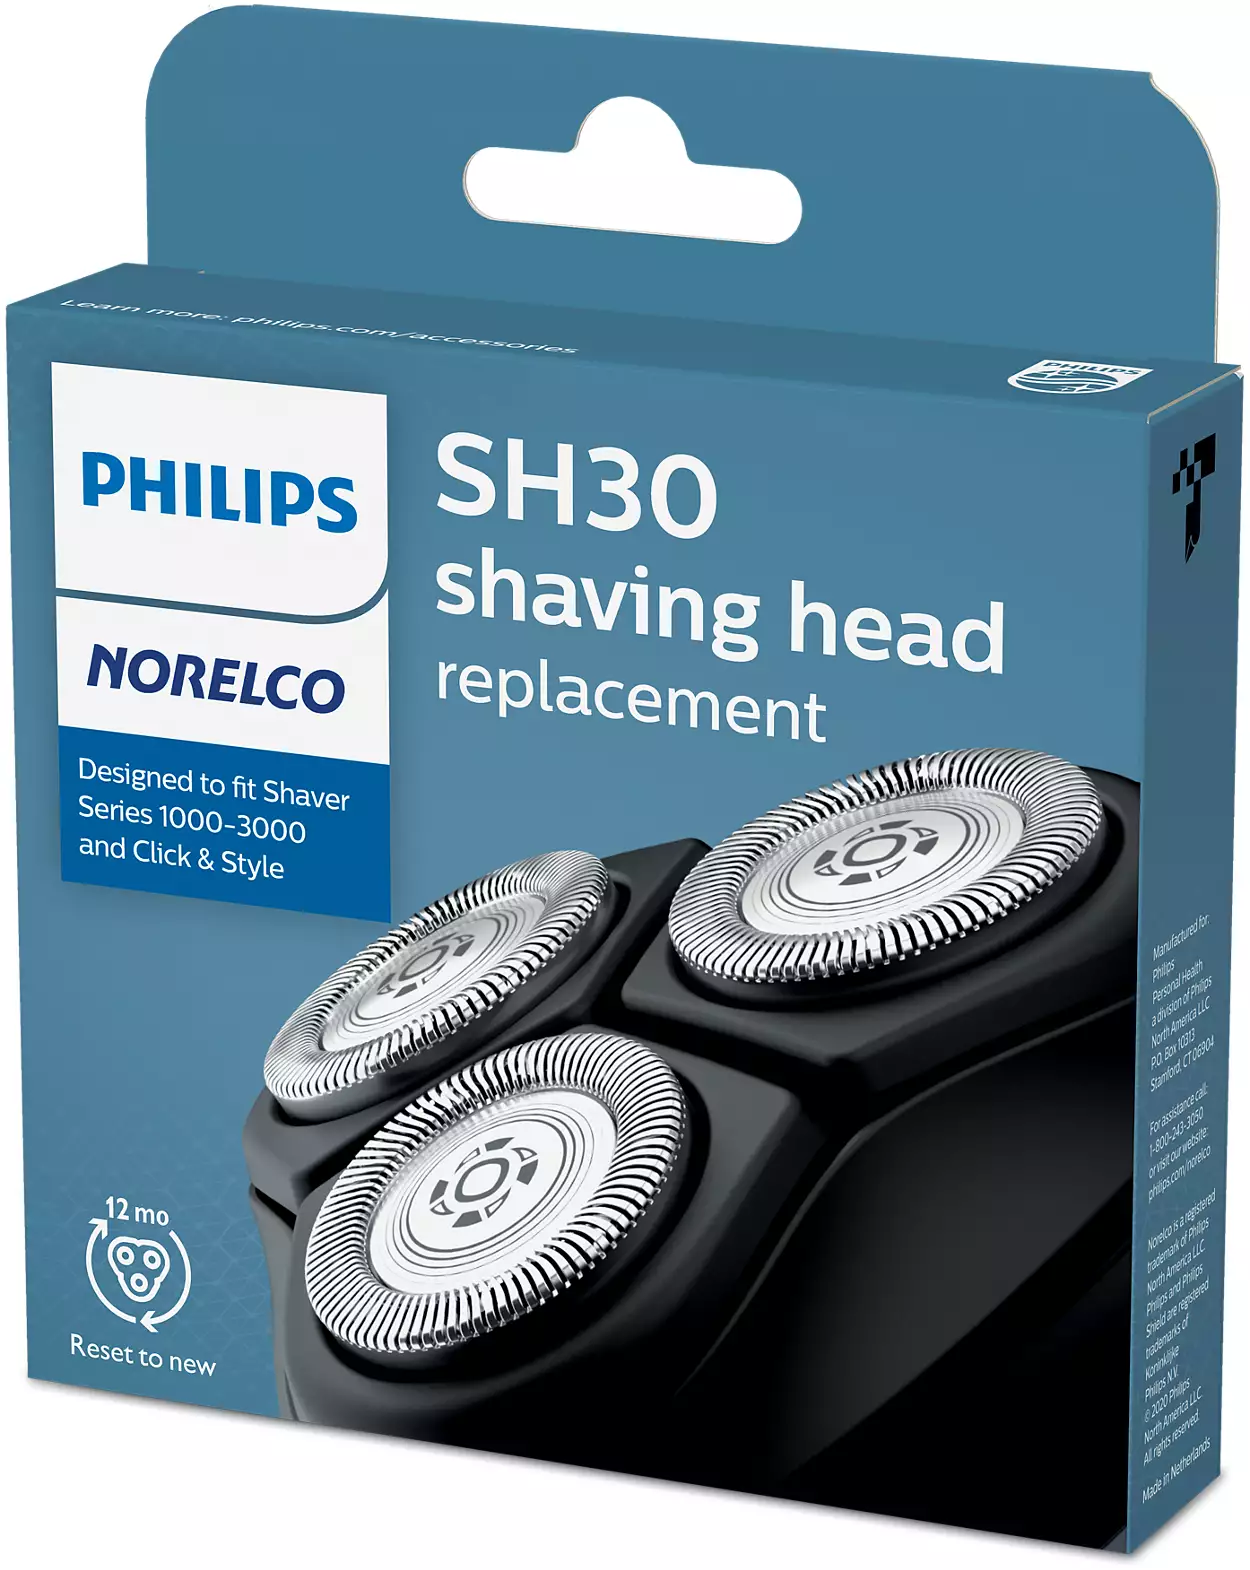 A box of the sh 3 0 shaving head.